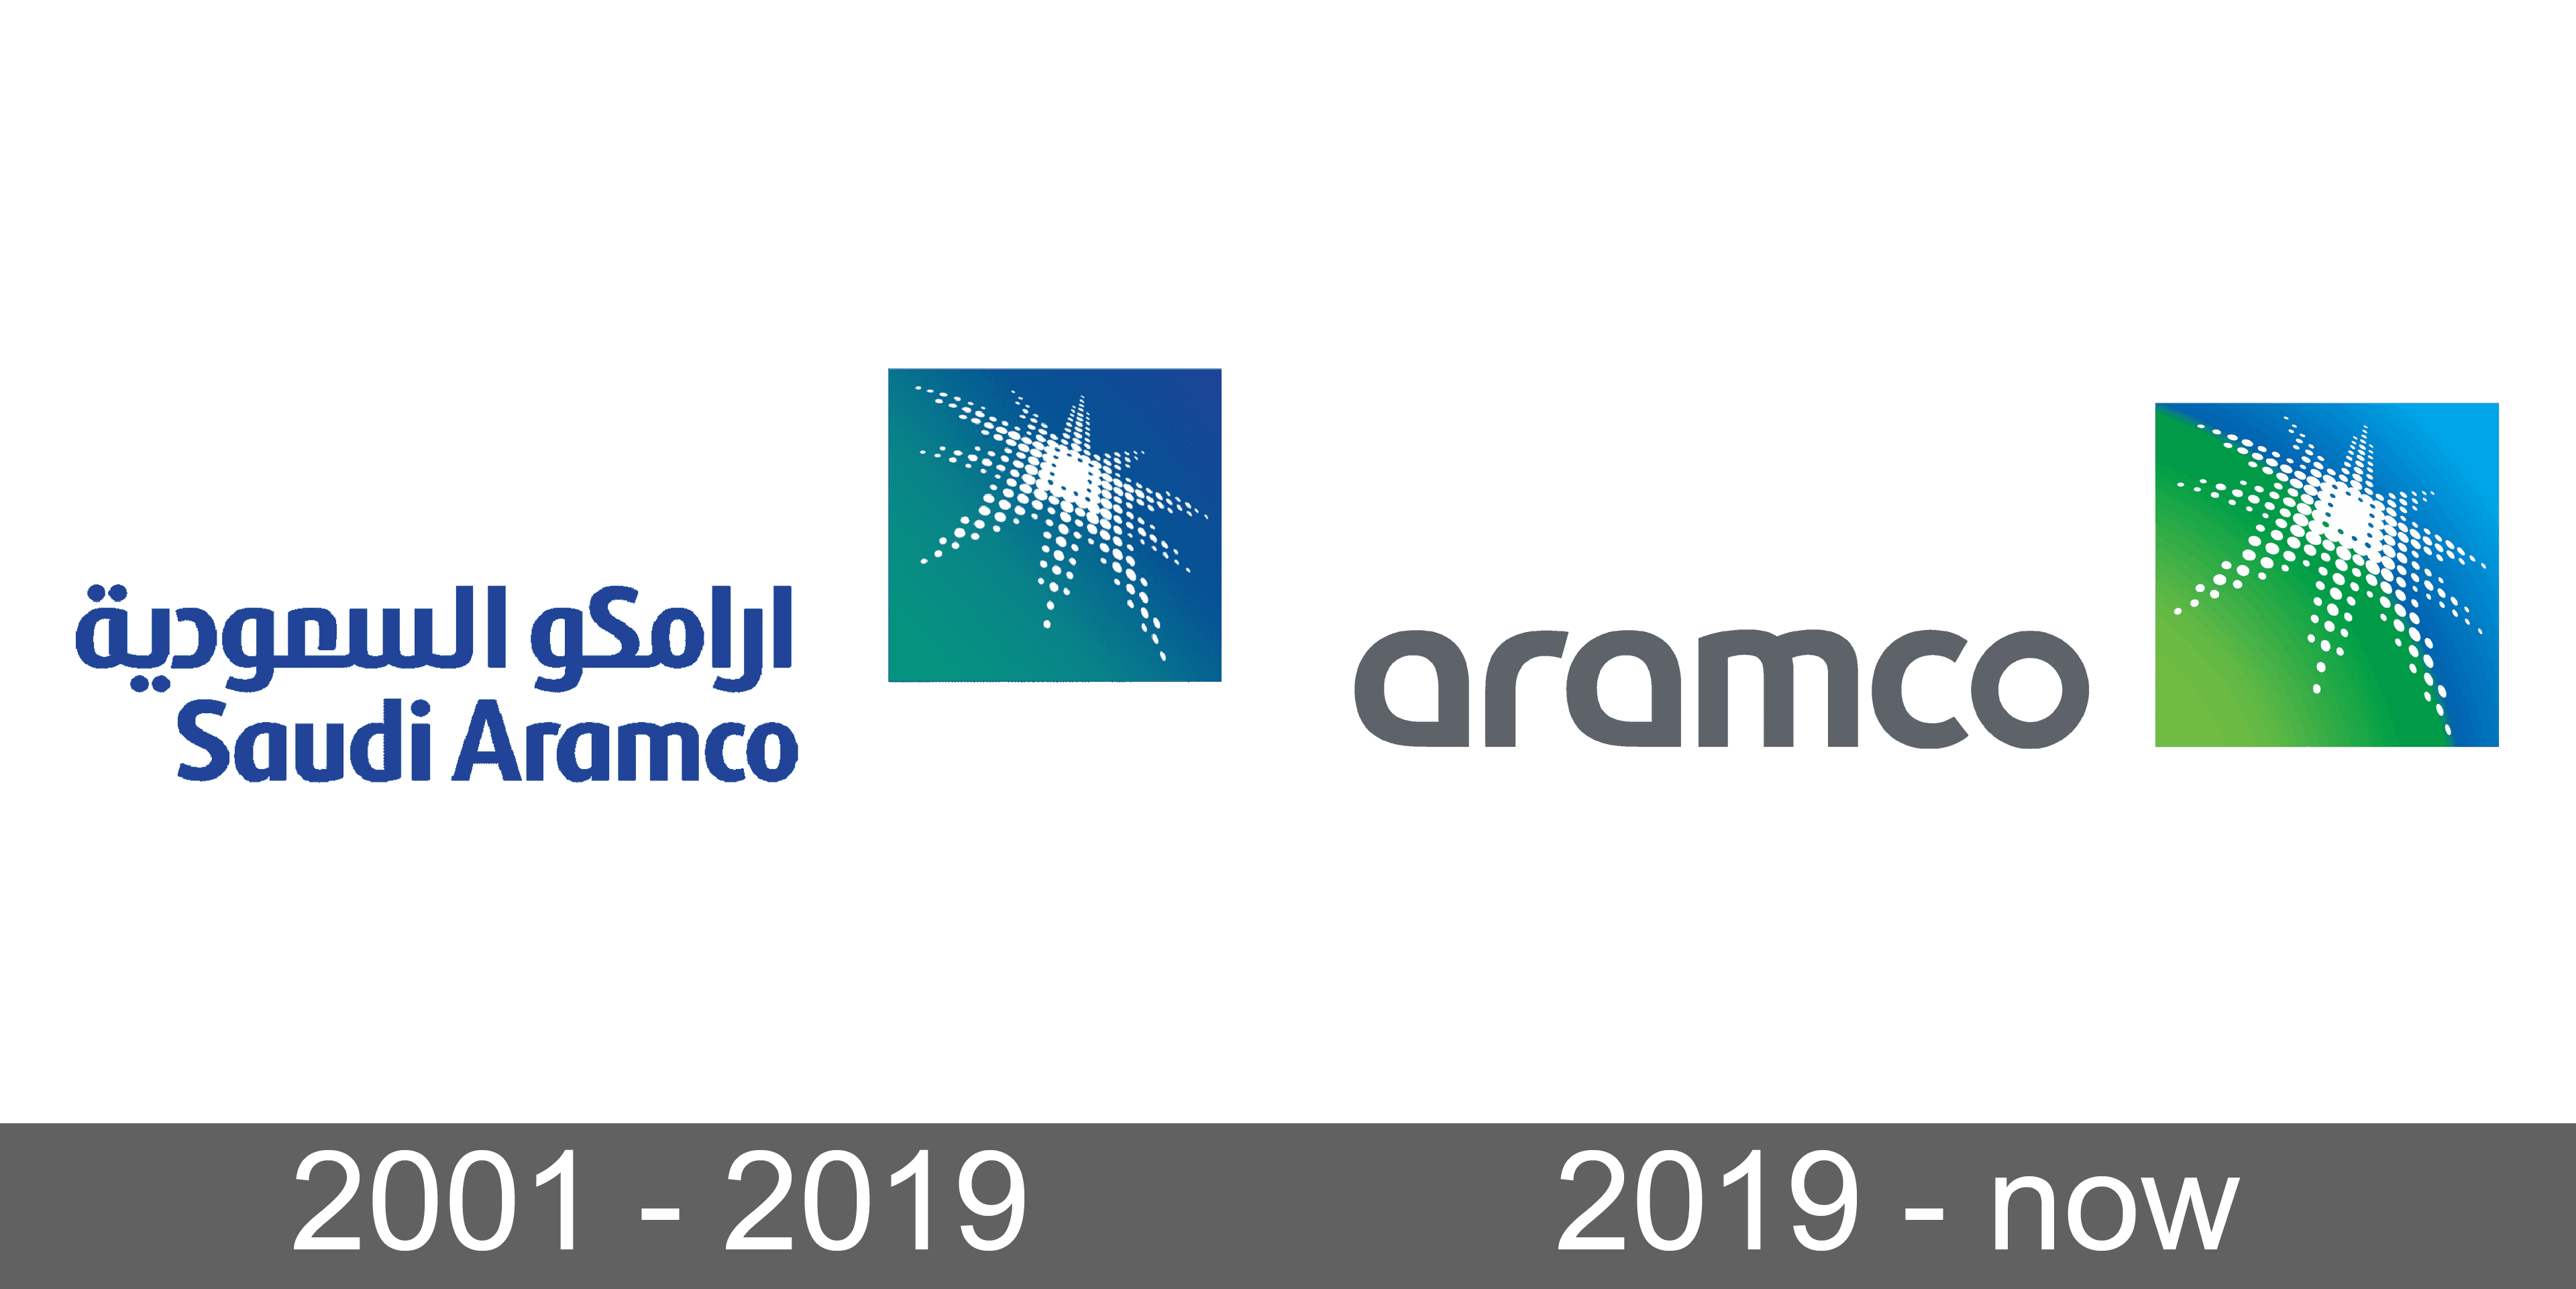 Brandfetch | Aramco Logos & Brand Assets